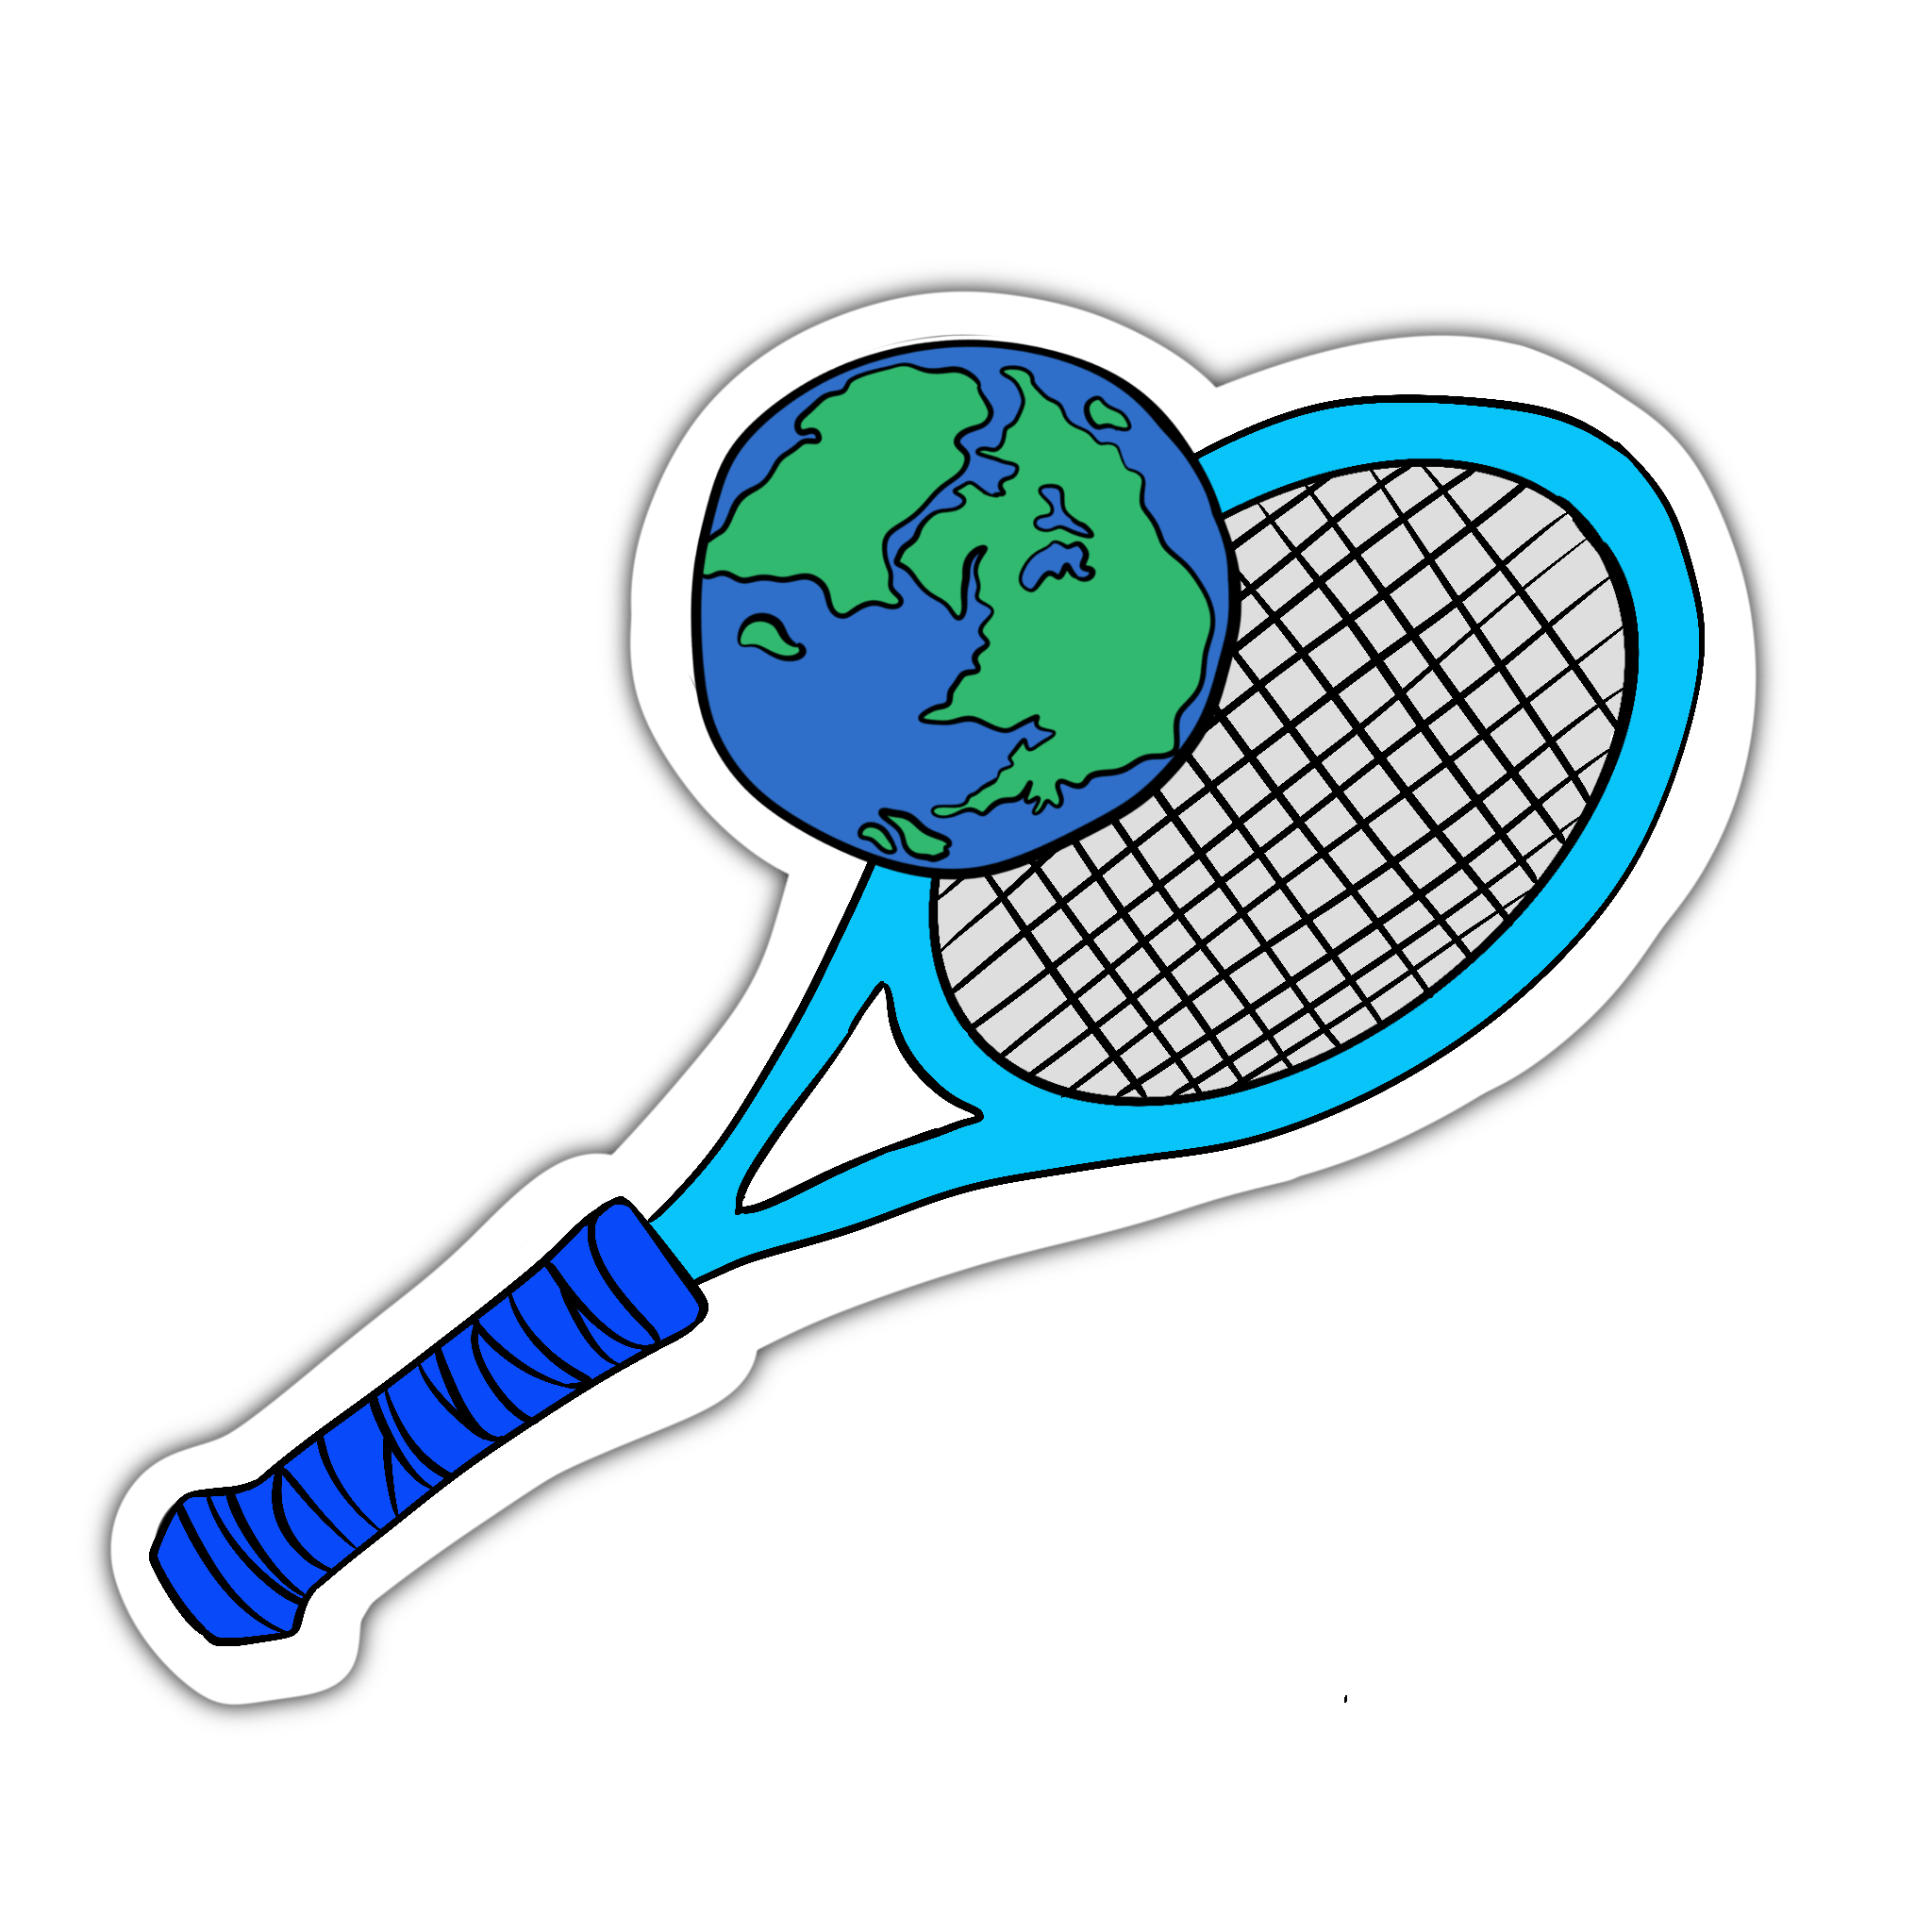 Tennis racket hitting planet earth